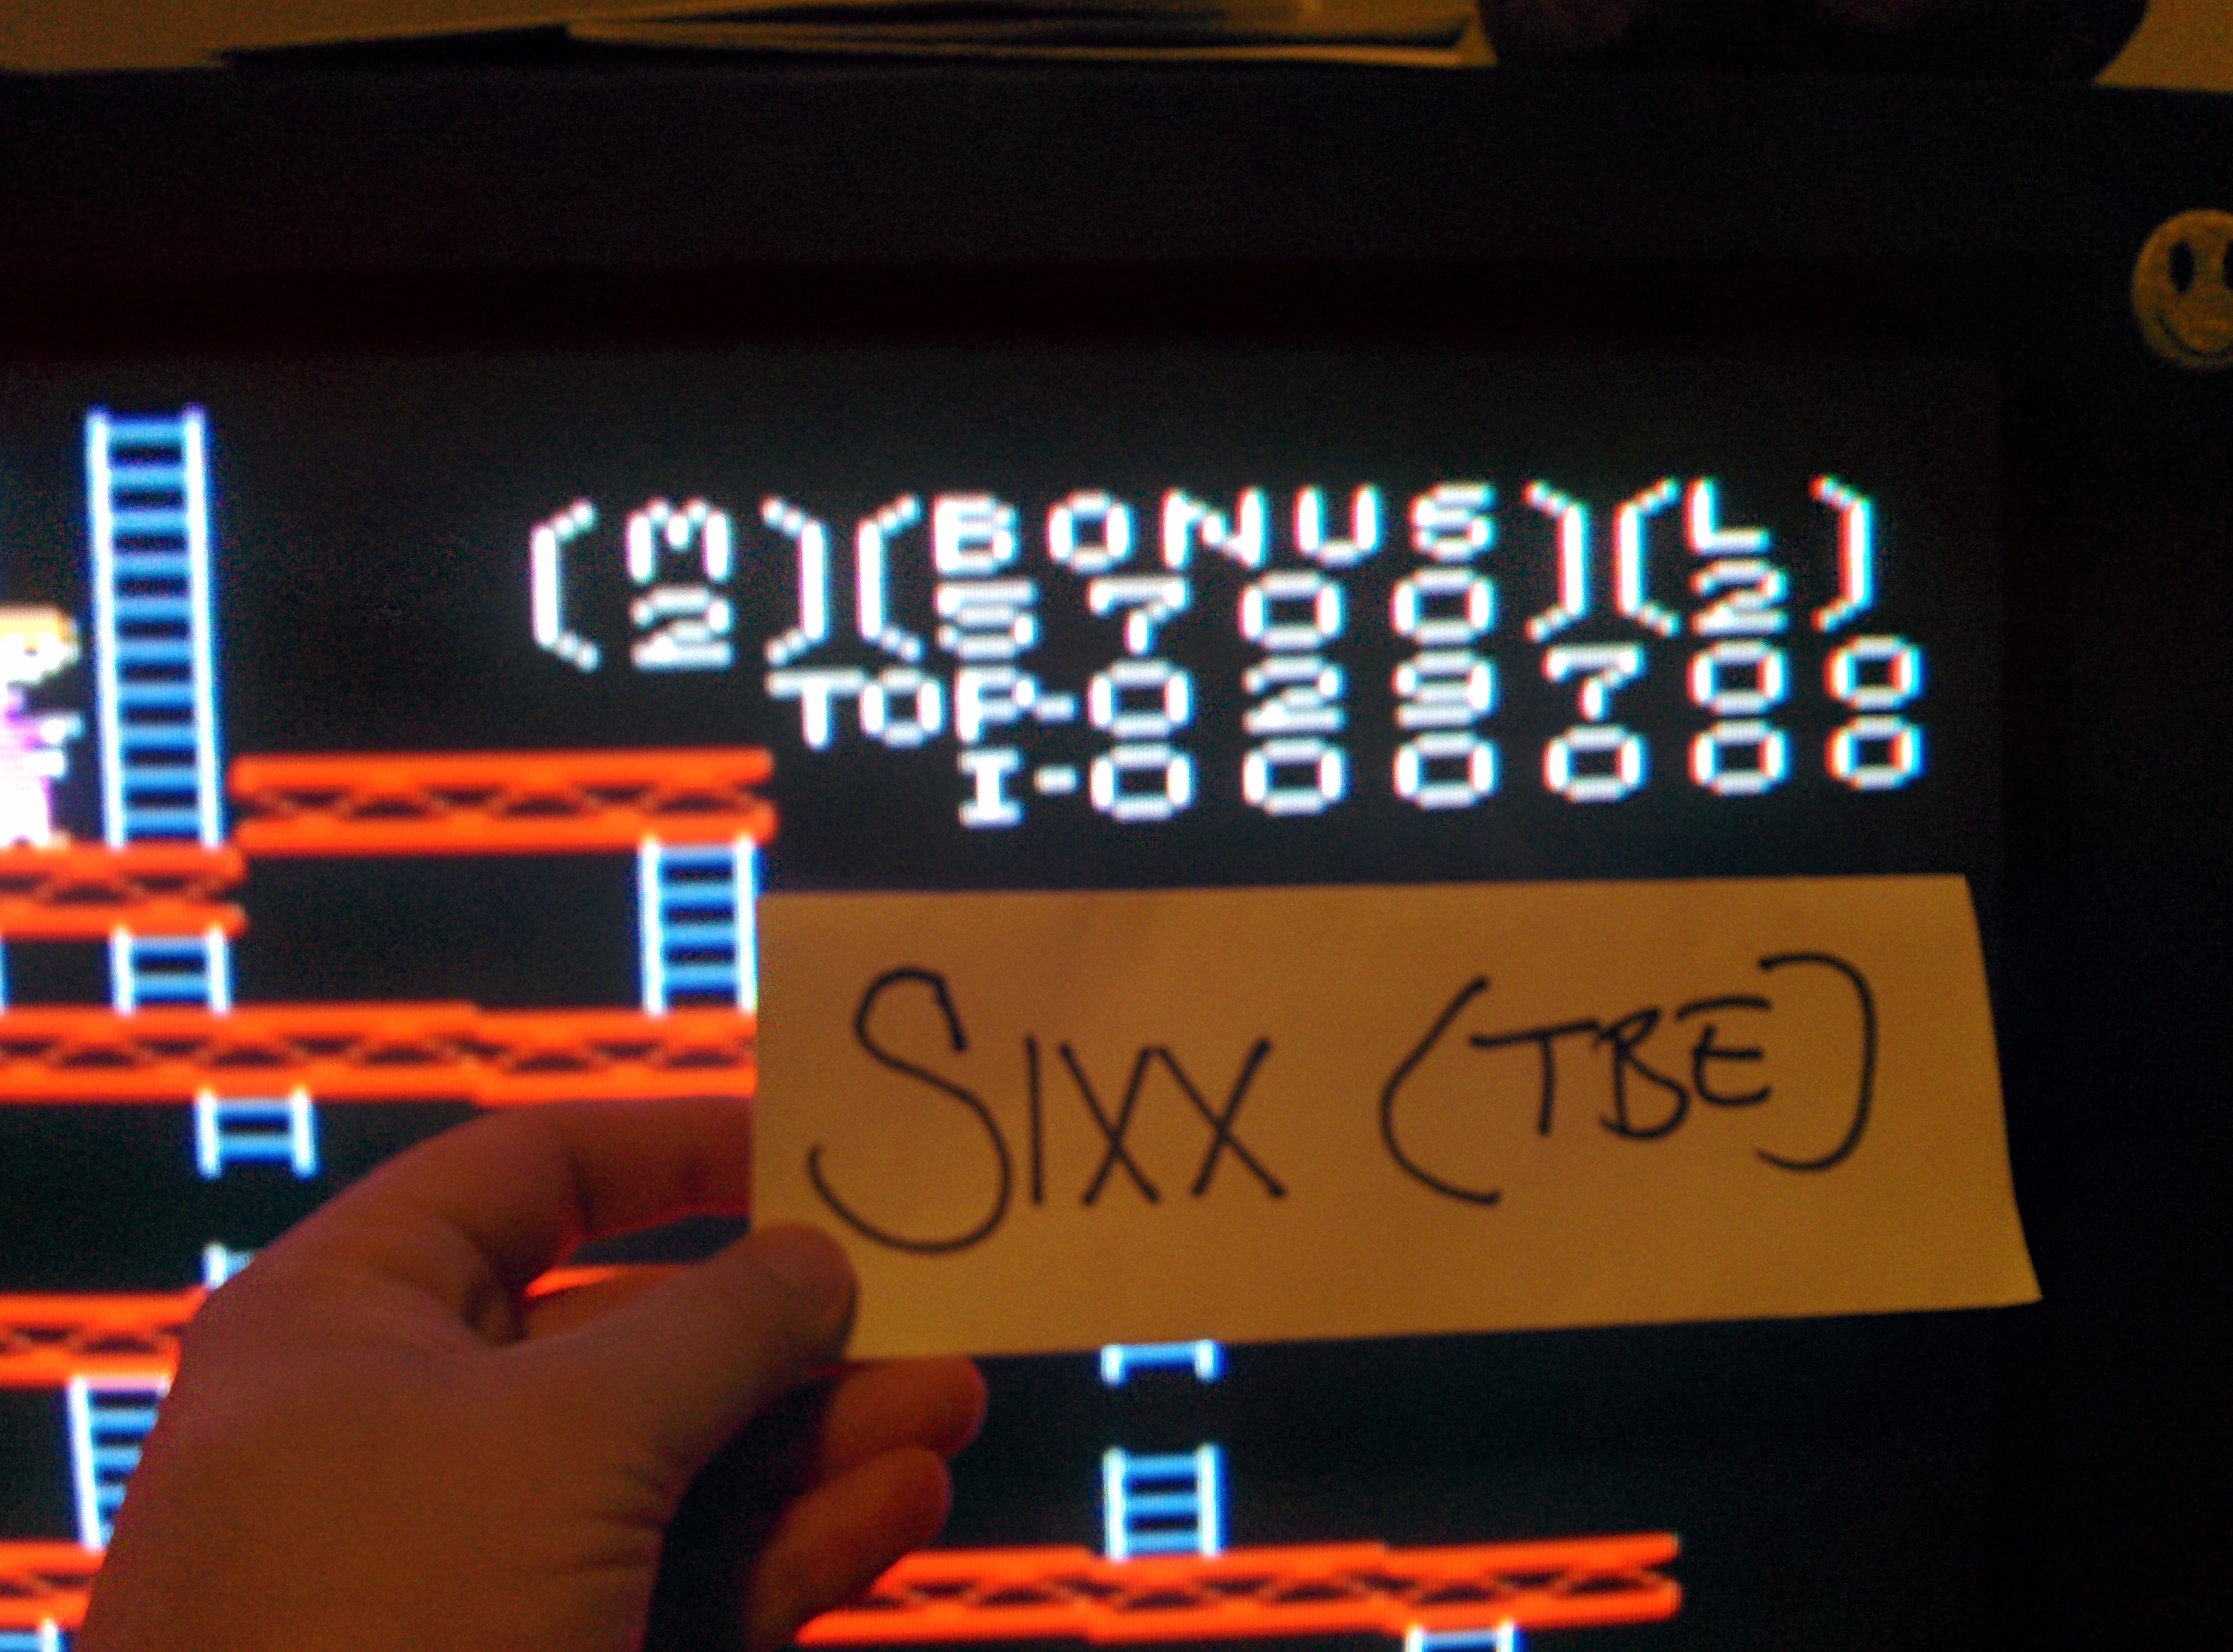 Sixx: Donkey Kong: Standard (Atari 7800 Emulated) 29,700 points on 2014-07-27 15:17:13